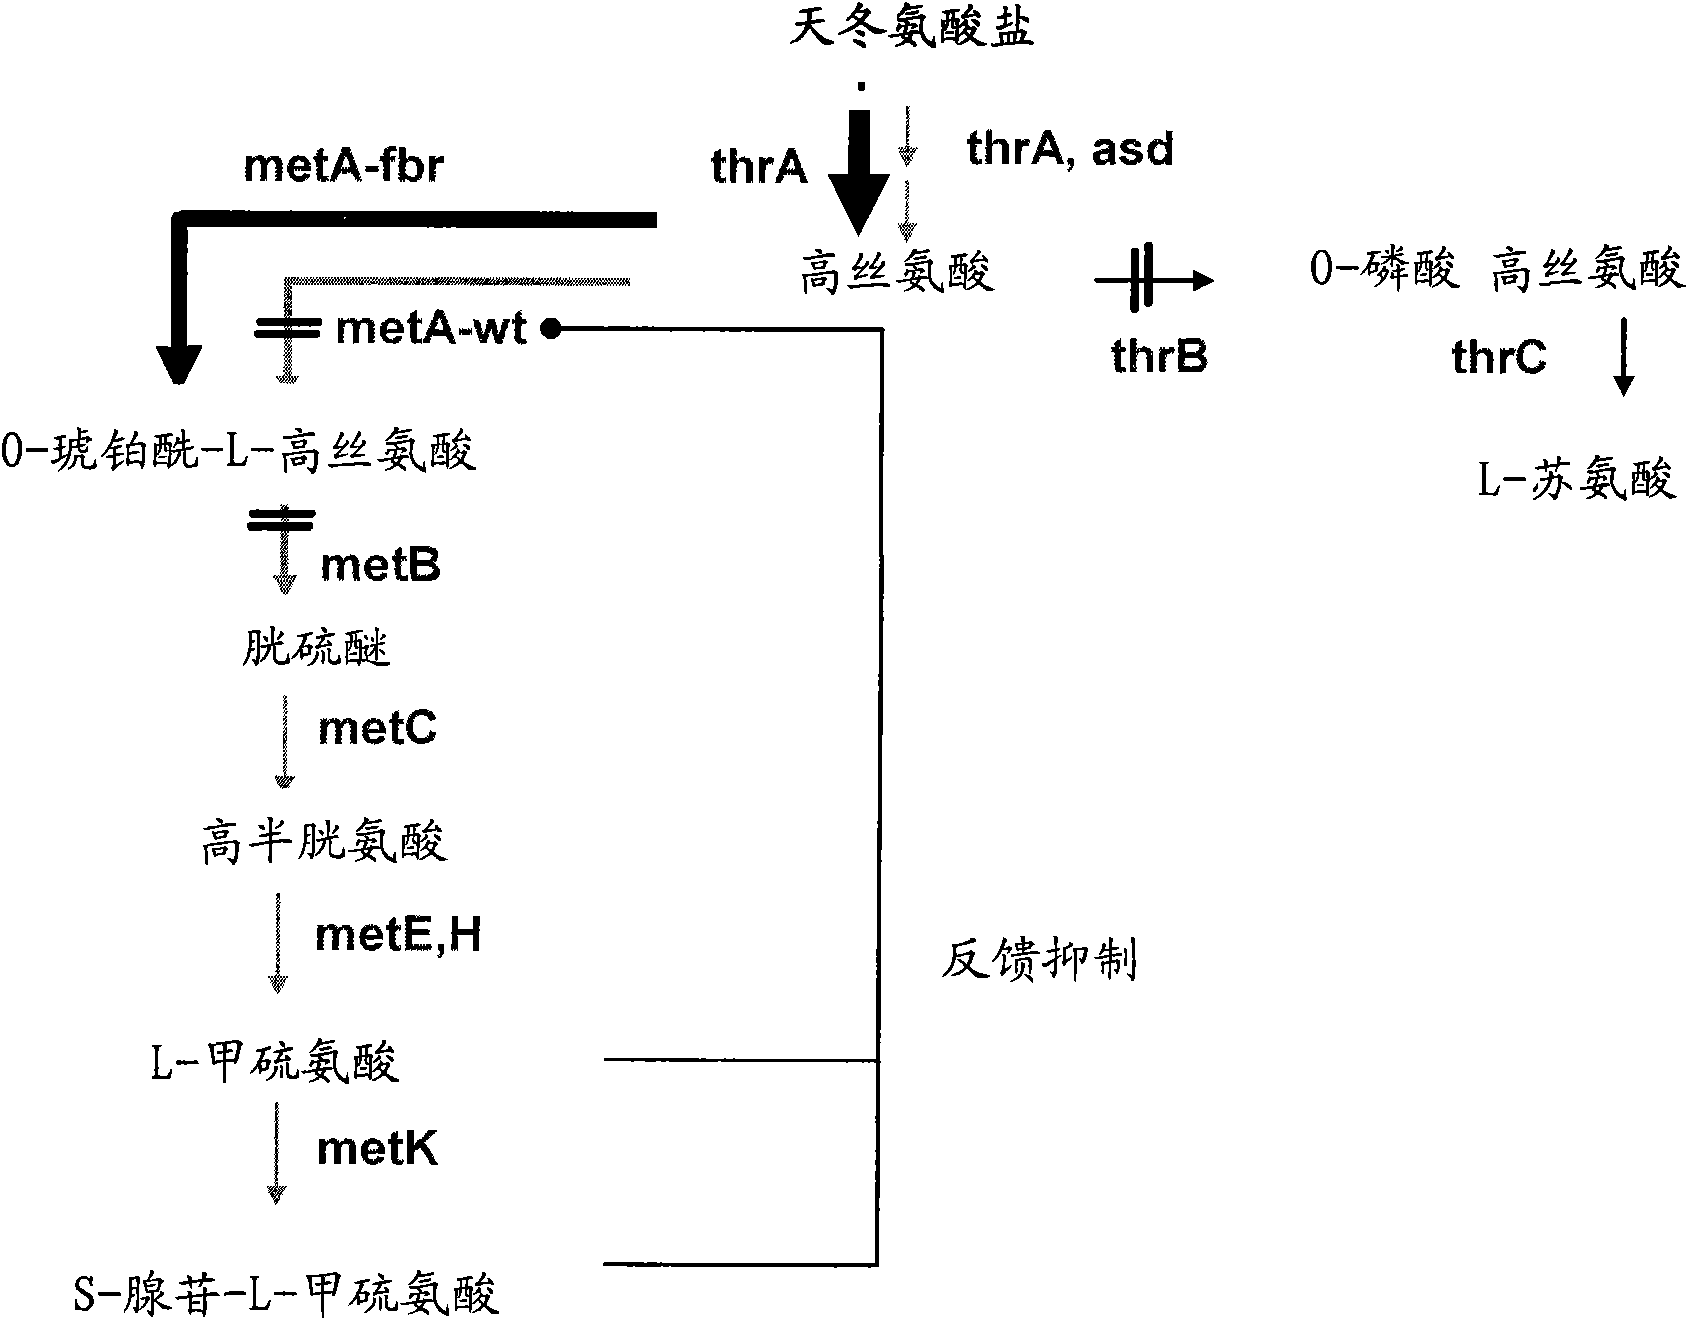 Microorganism producing l-methionine precursor and the method of producing l-methionine precursor using the microorganism